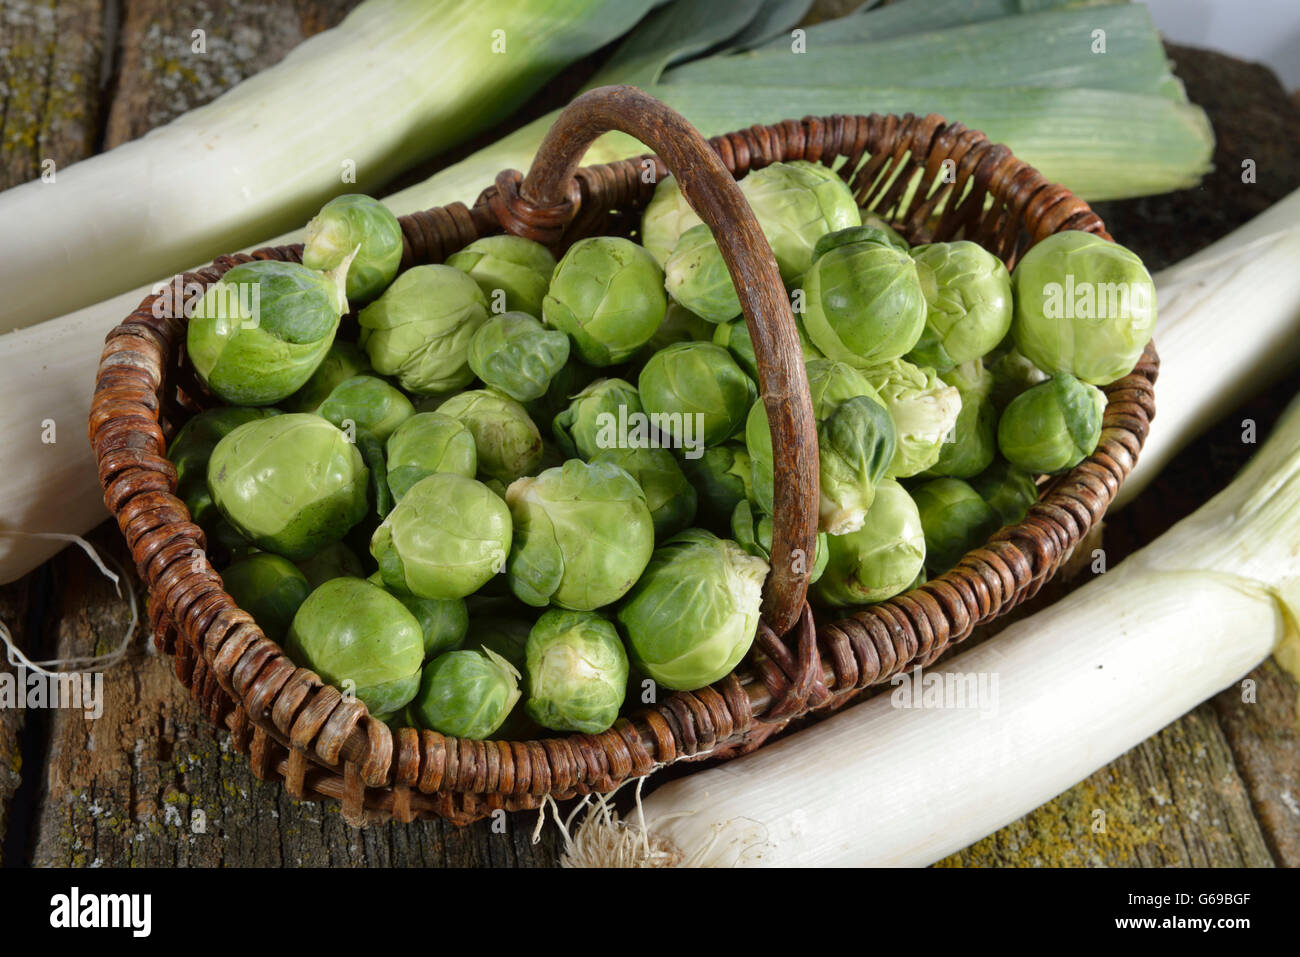 Brussels sprout, leek / (Brassica oleracea var. gemmifera, Allium porrum) Stock Photo